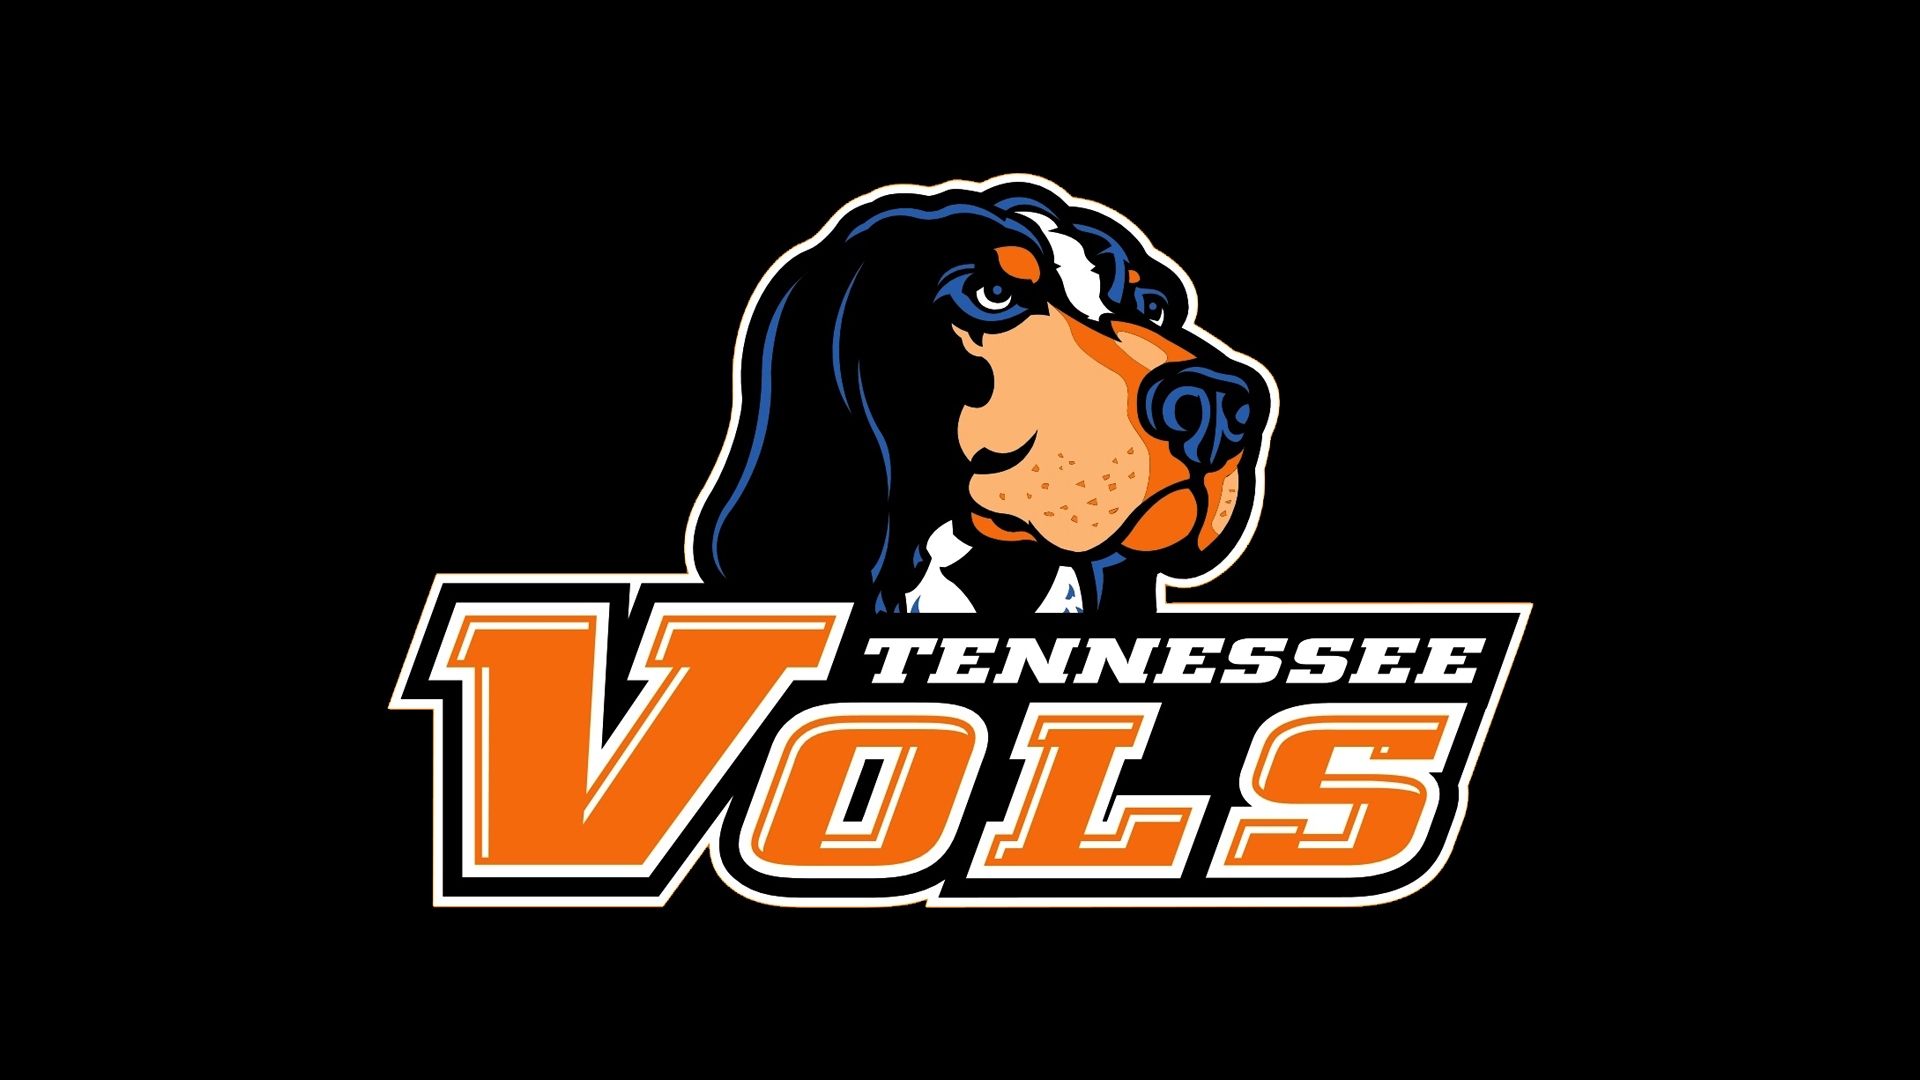 Tennessee Vols Logo Black for 1920 x 1080 HDTV 1080p resolution